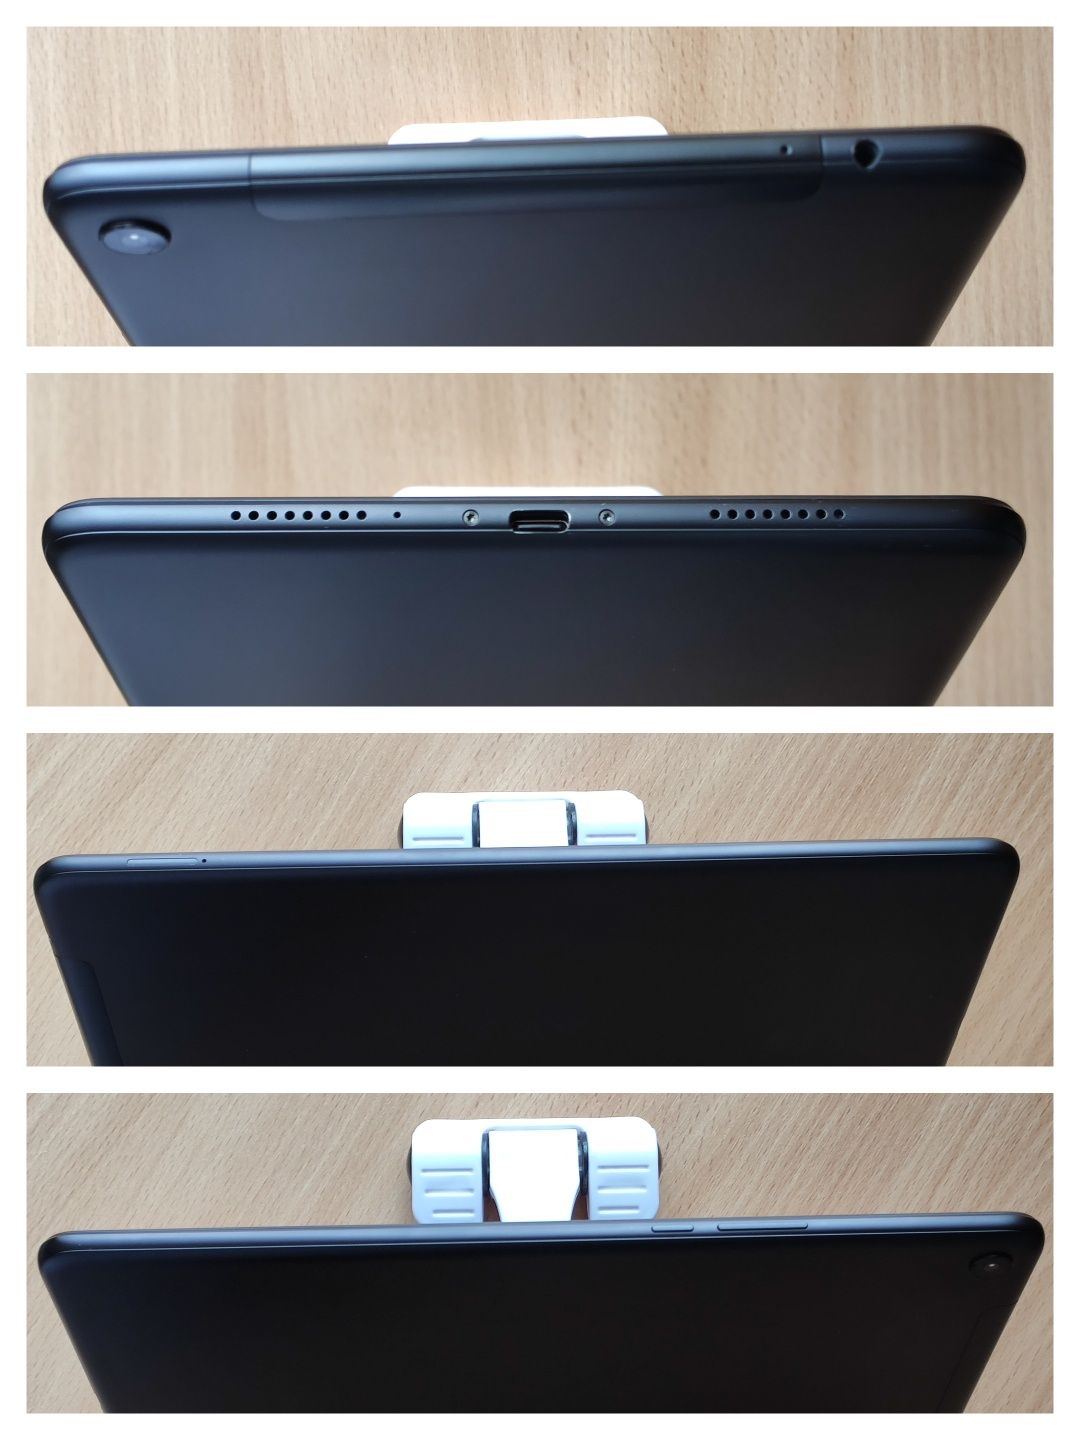 Xiaomi mi pad 4 plus 4/64 gb (LTE) black